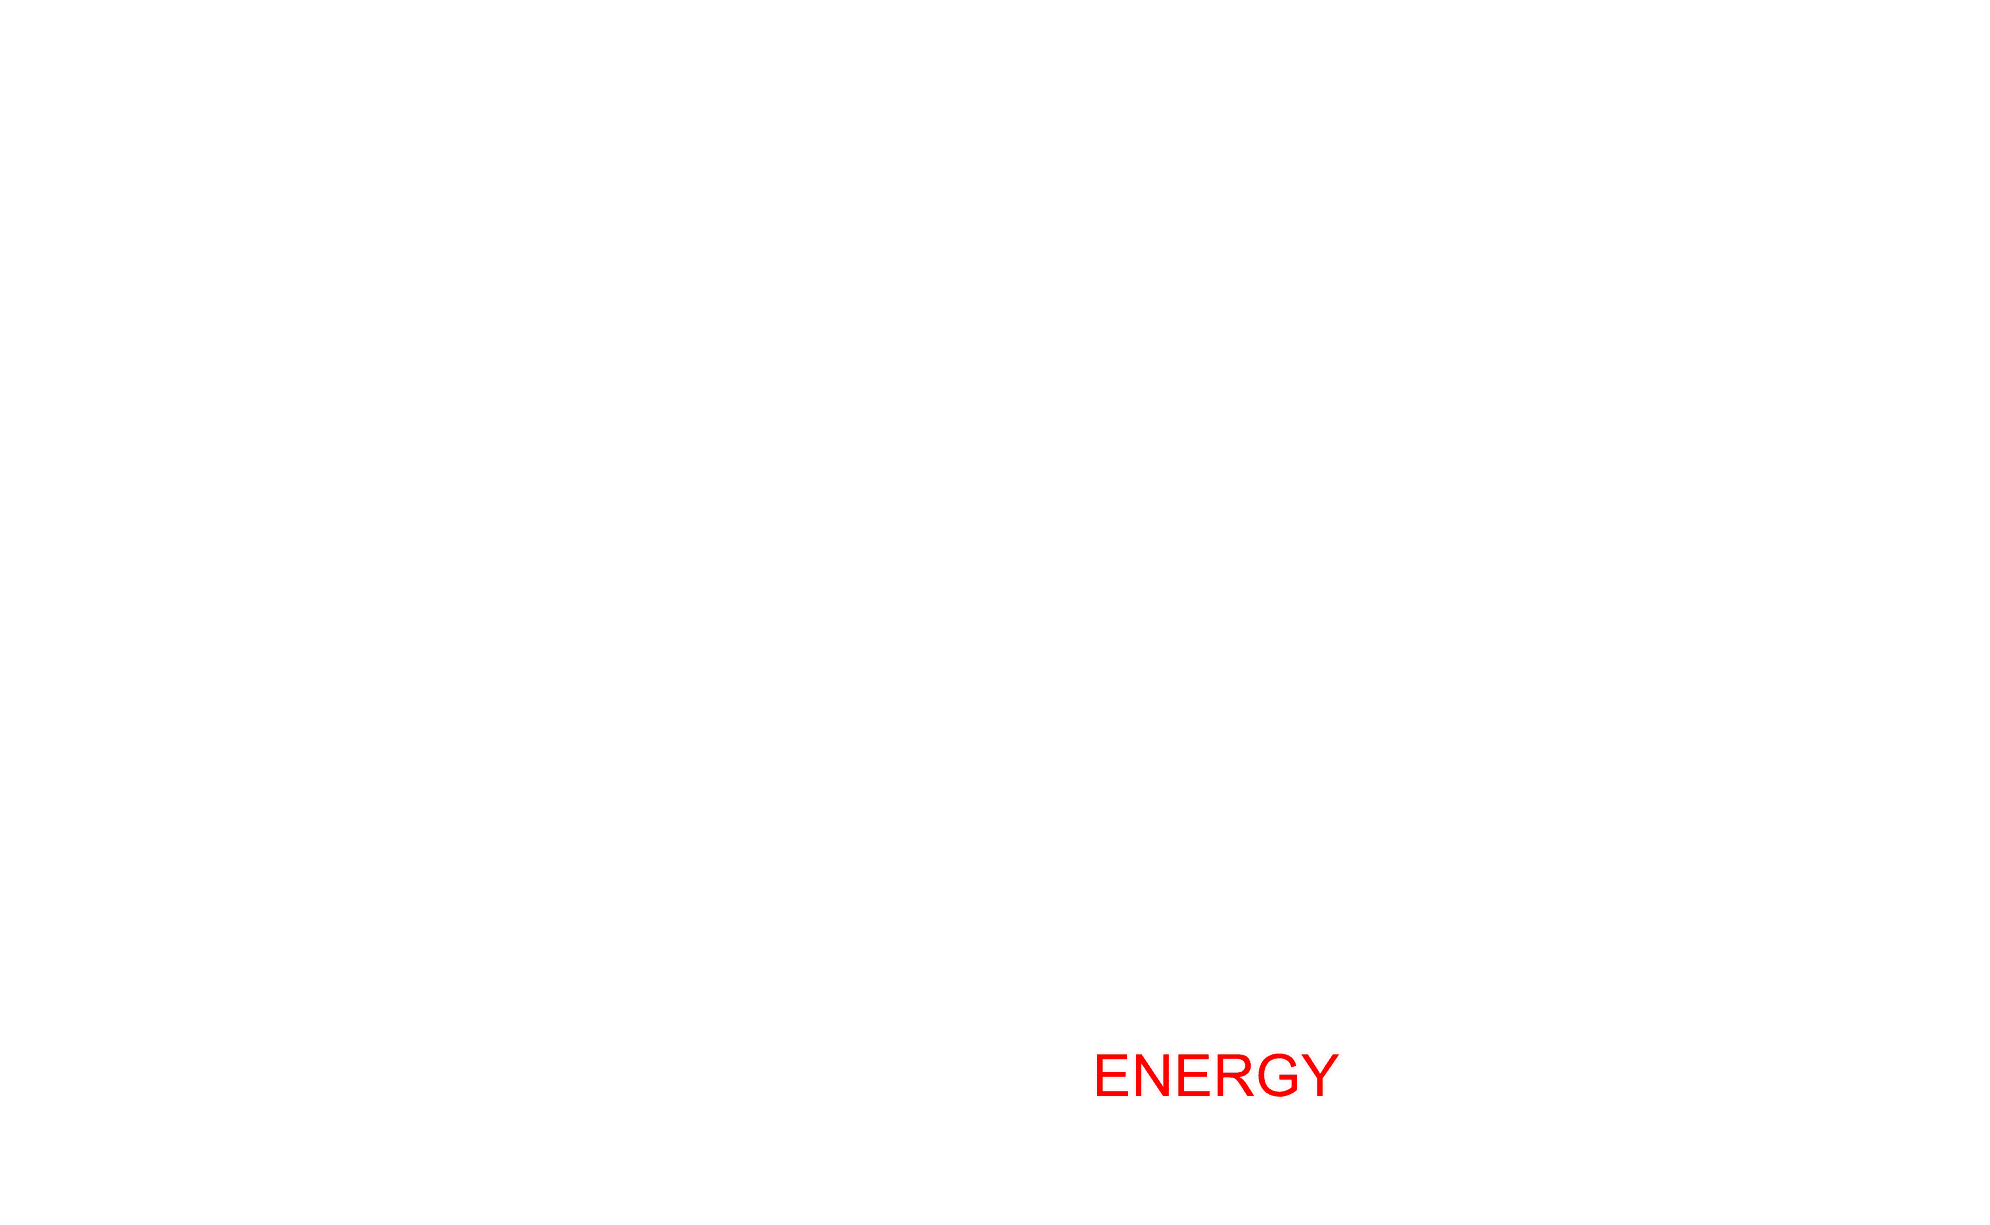 Text: energy